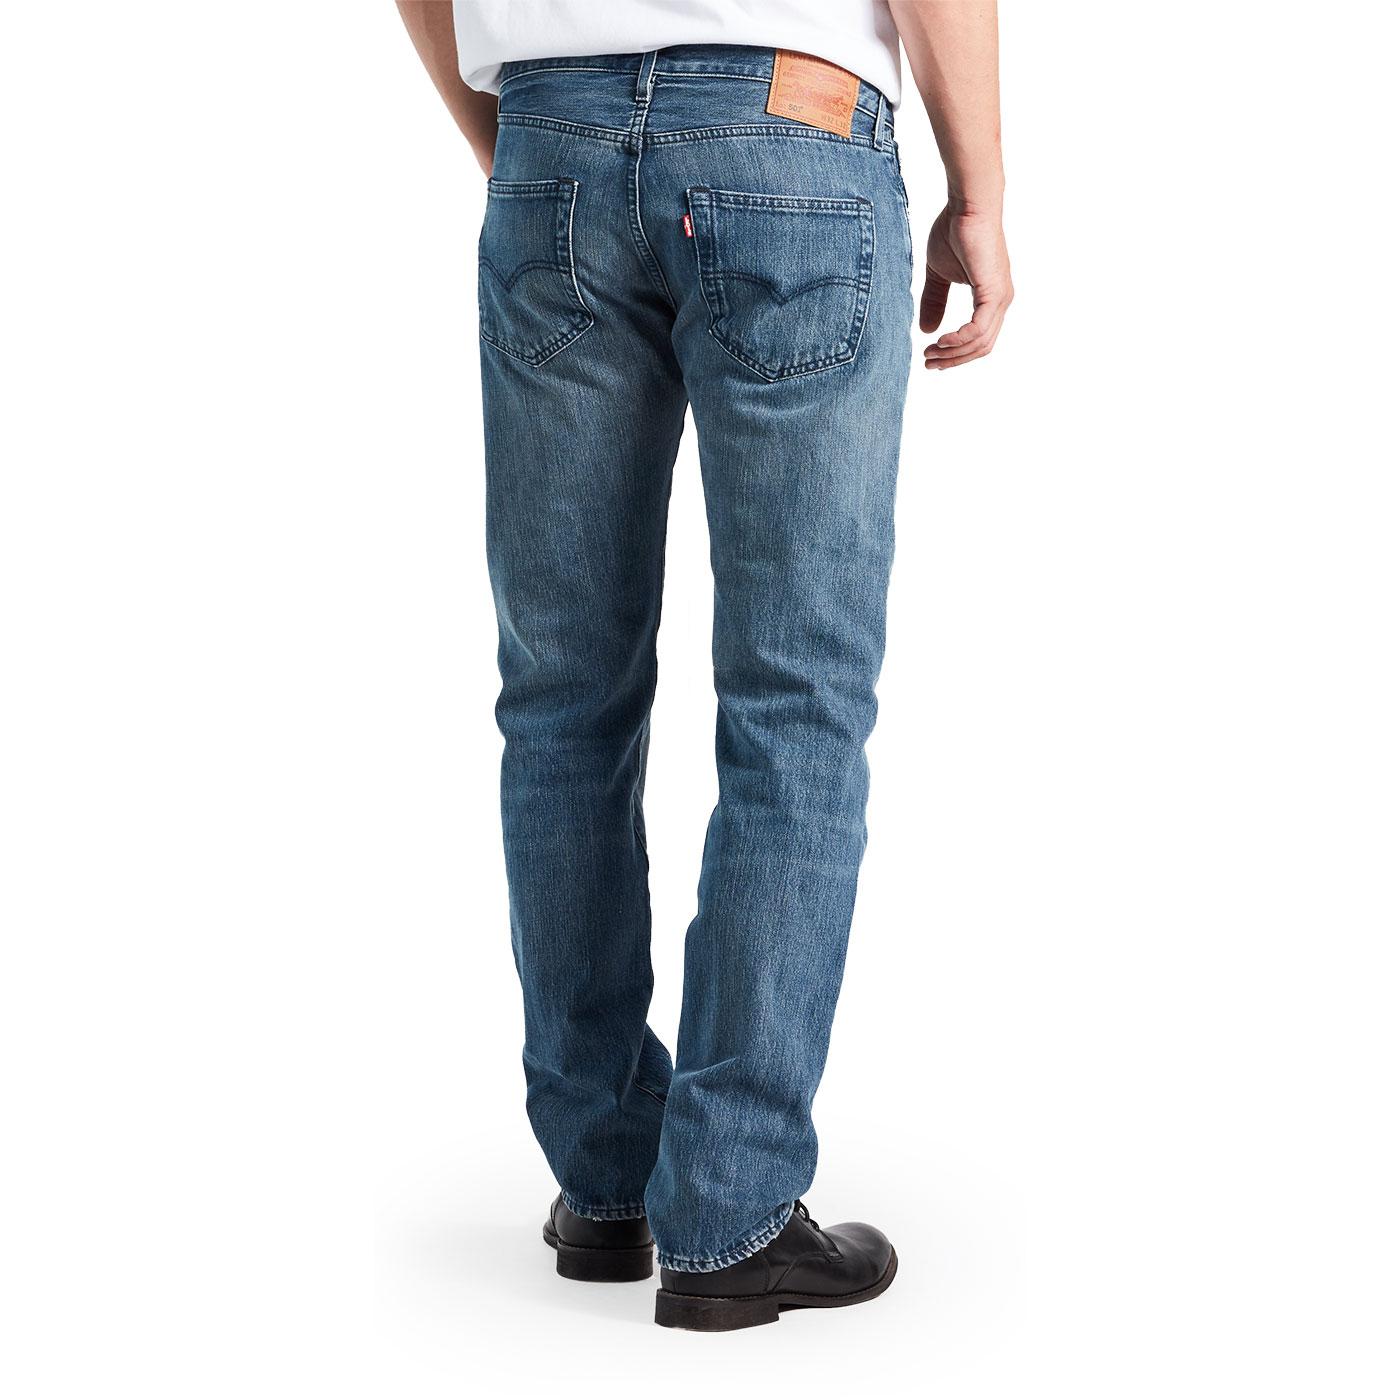 Retro Mod Original Fit Denim Jeans 